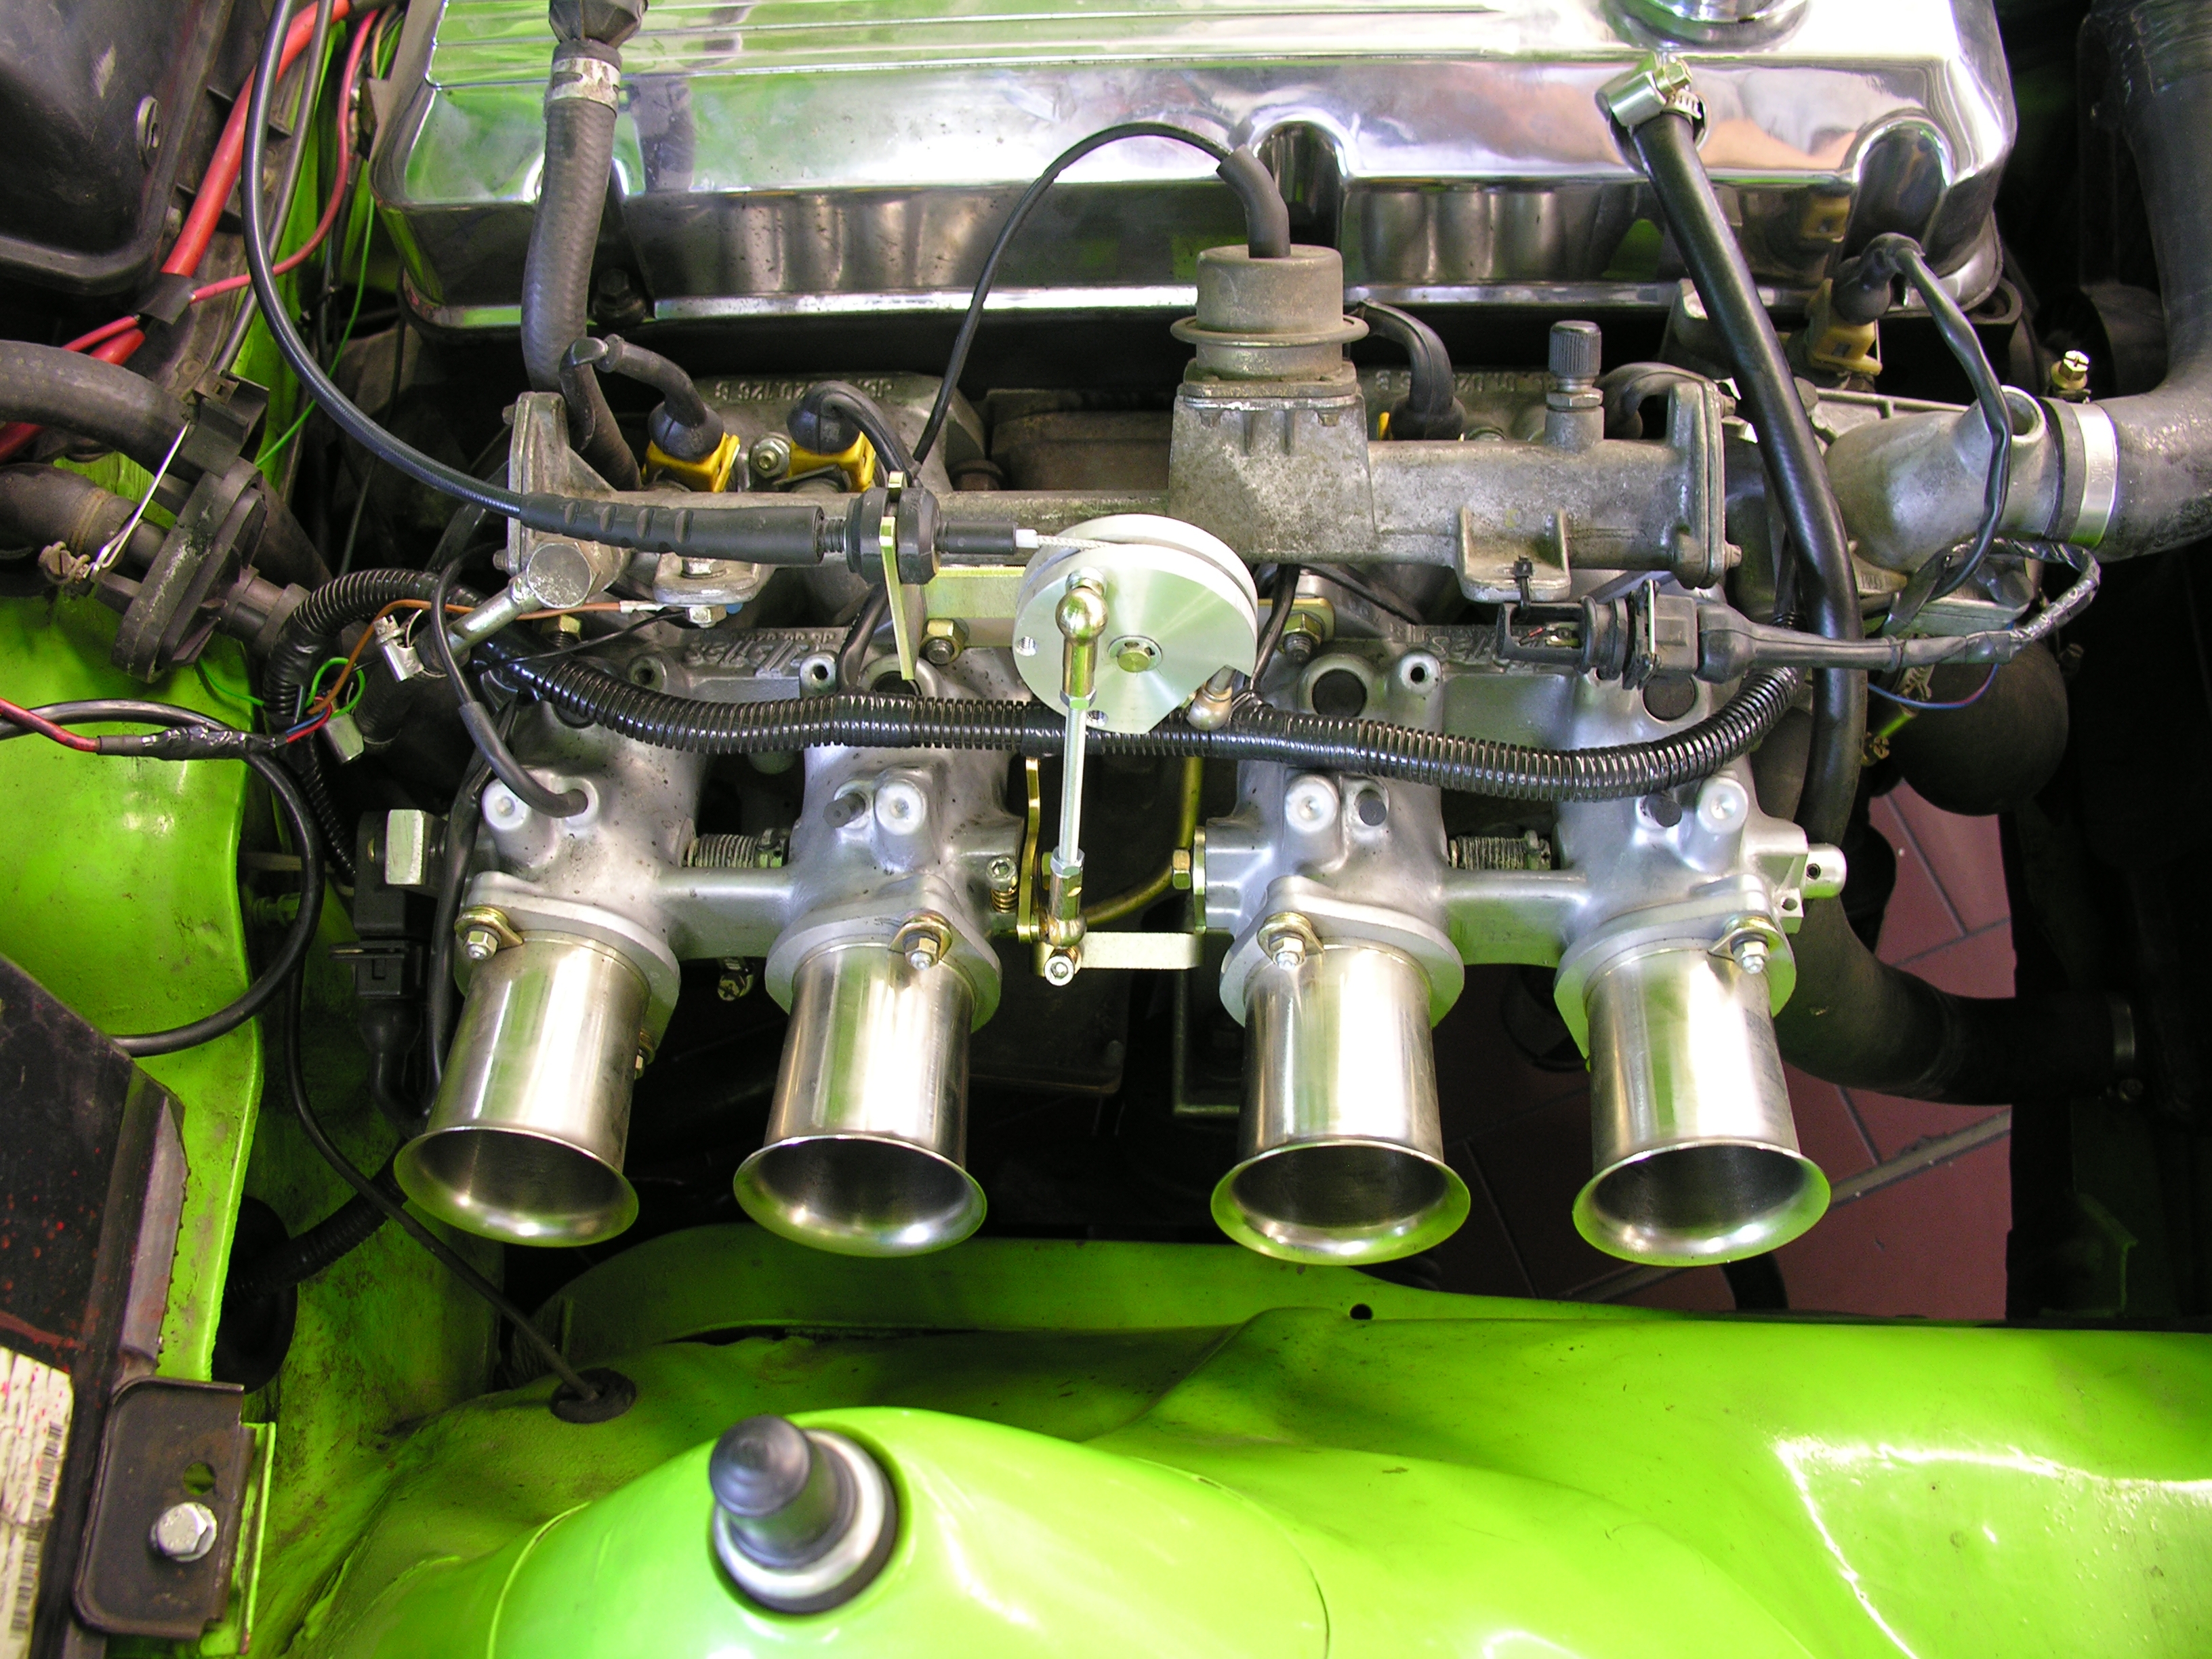 Mutli-throttle intake system for racing  for Opel / Vauxhall  CIH 8V